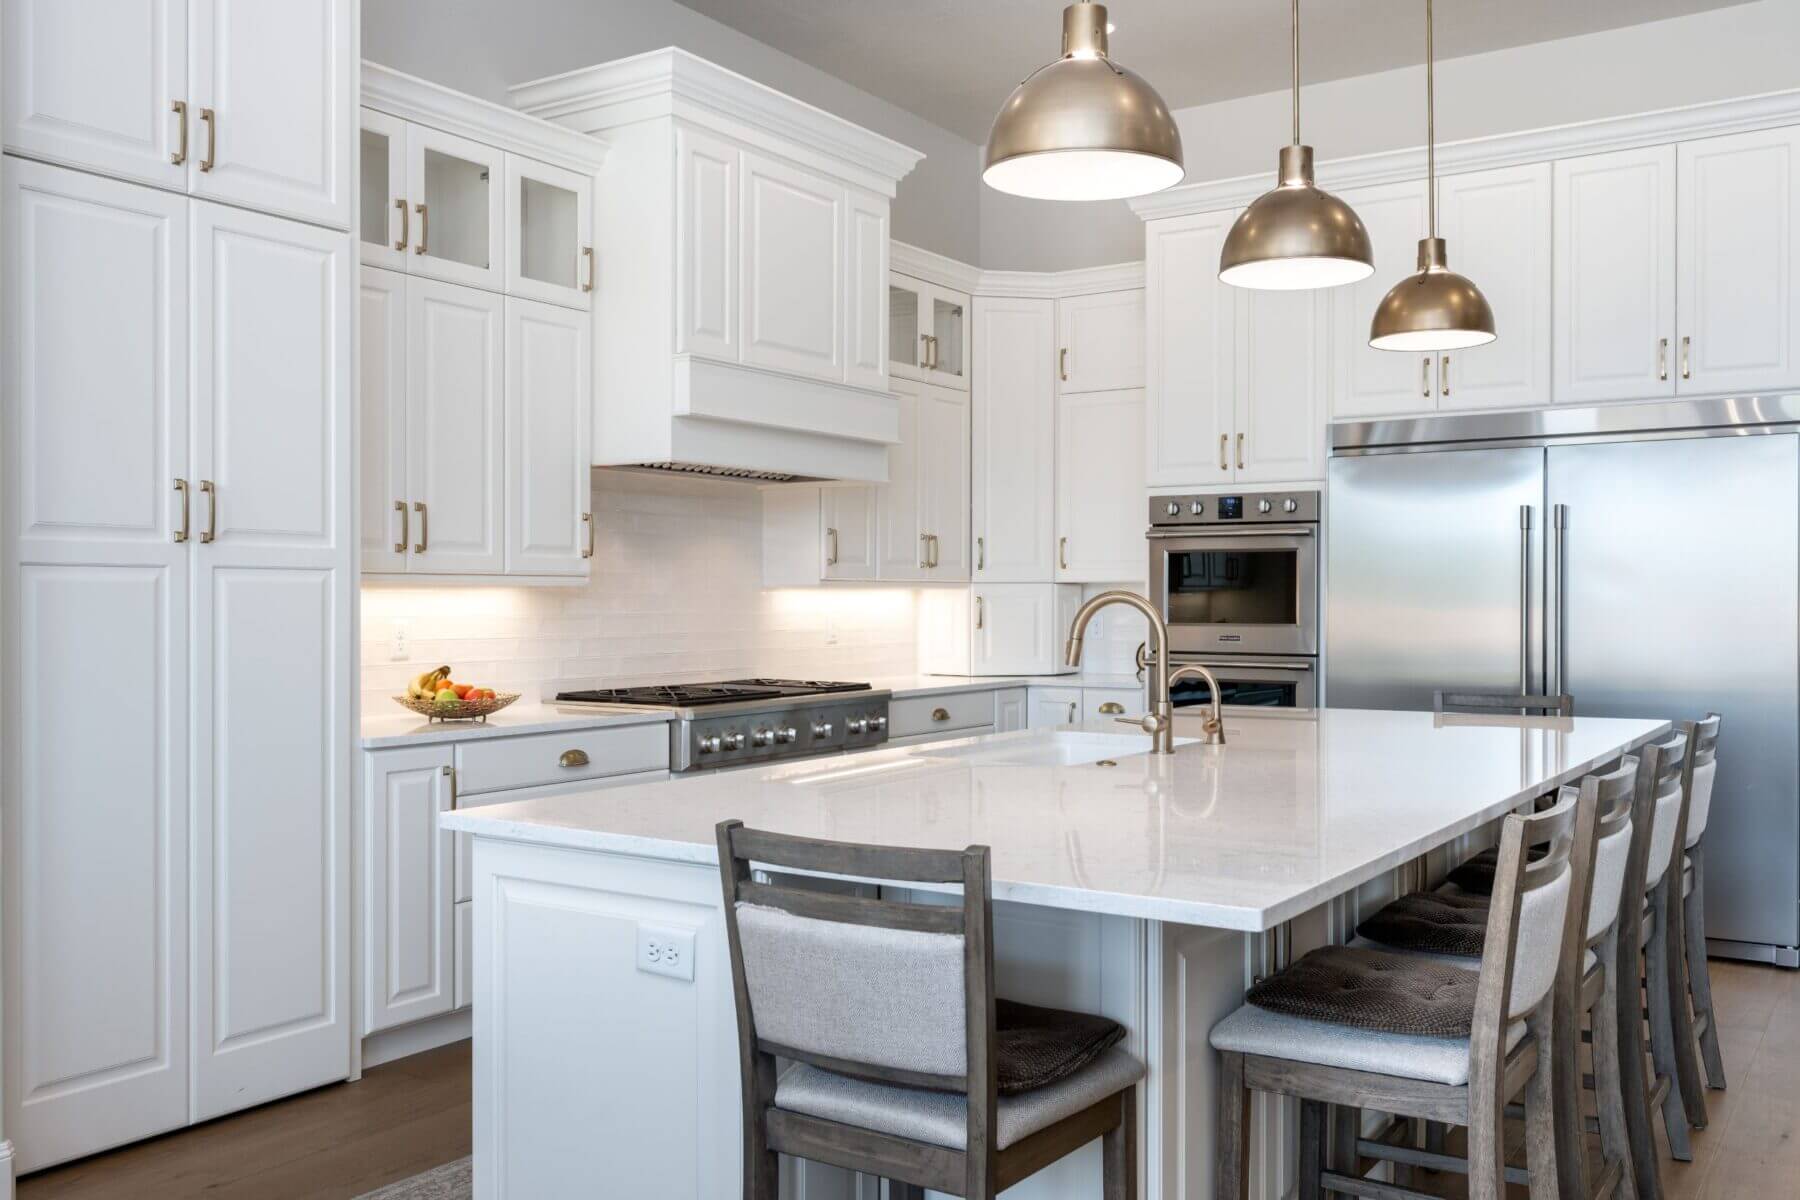 Kitchen Counter Design Maximizes Space | Custom Home Builder in St. George, Utah | Dennis Miller Homes